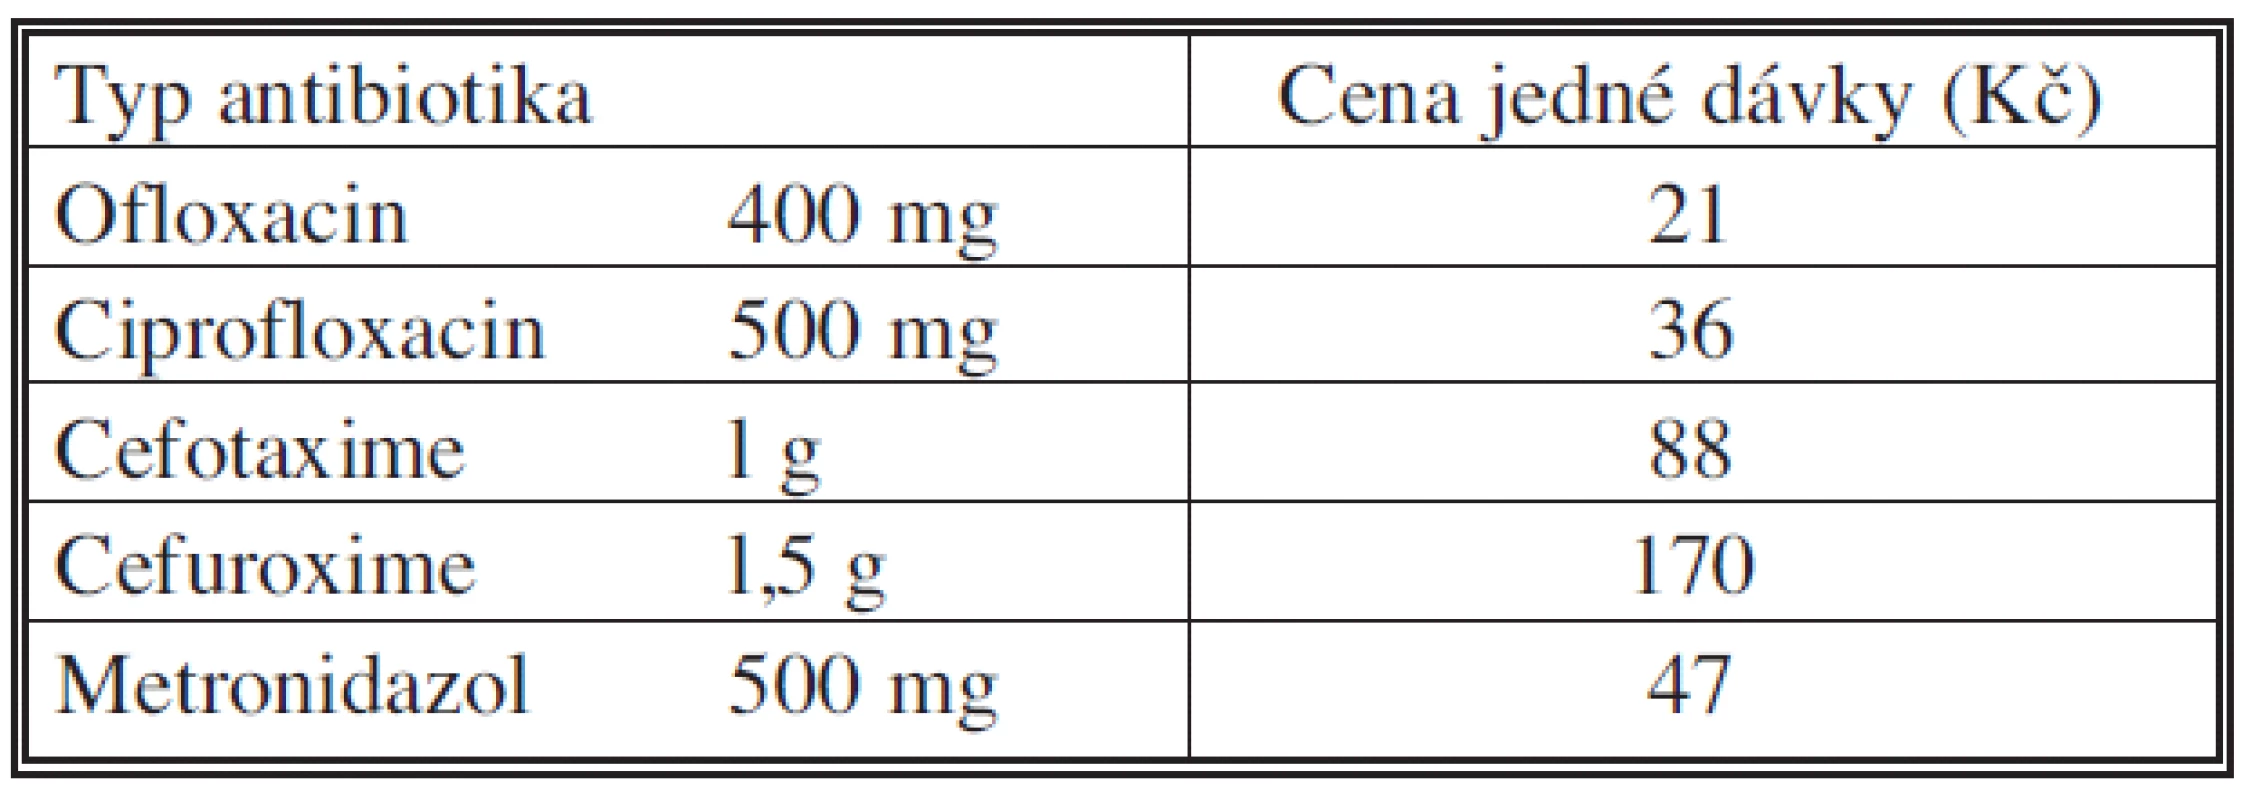 Cena jedné dávky antibiotické profylaxe
Tab. 7. Price of a single dose of antibiotic prophylaxis